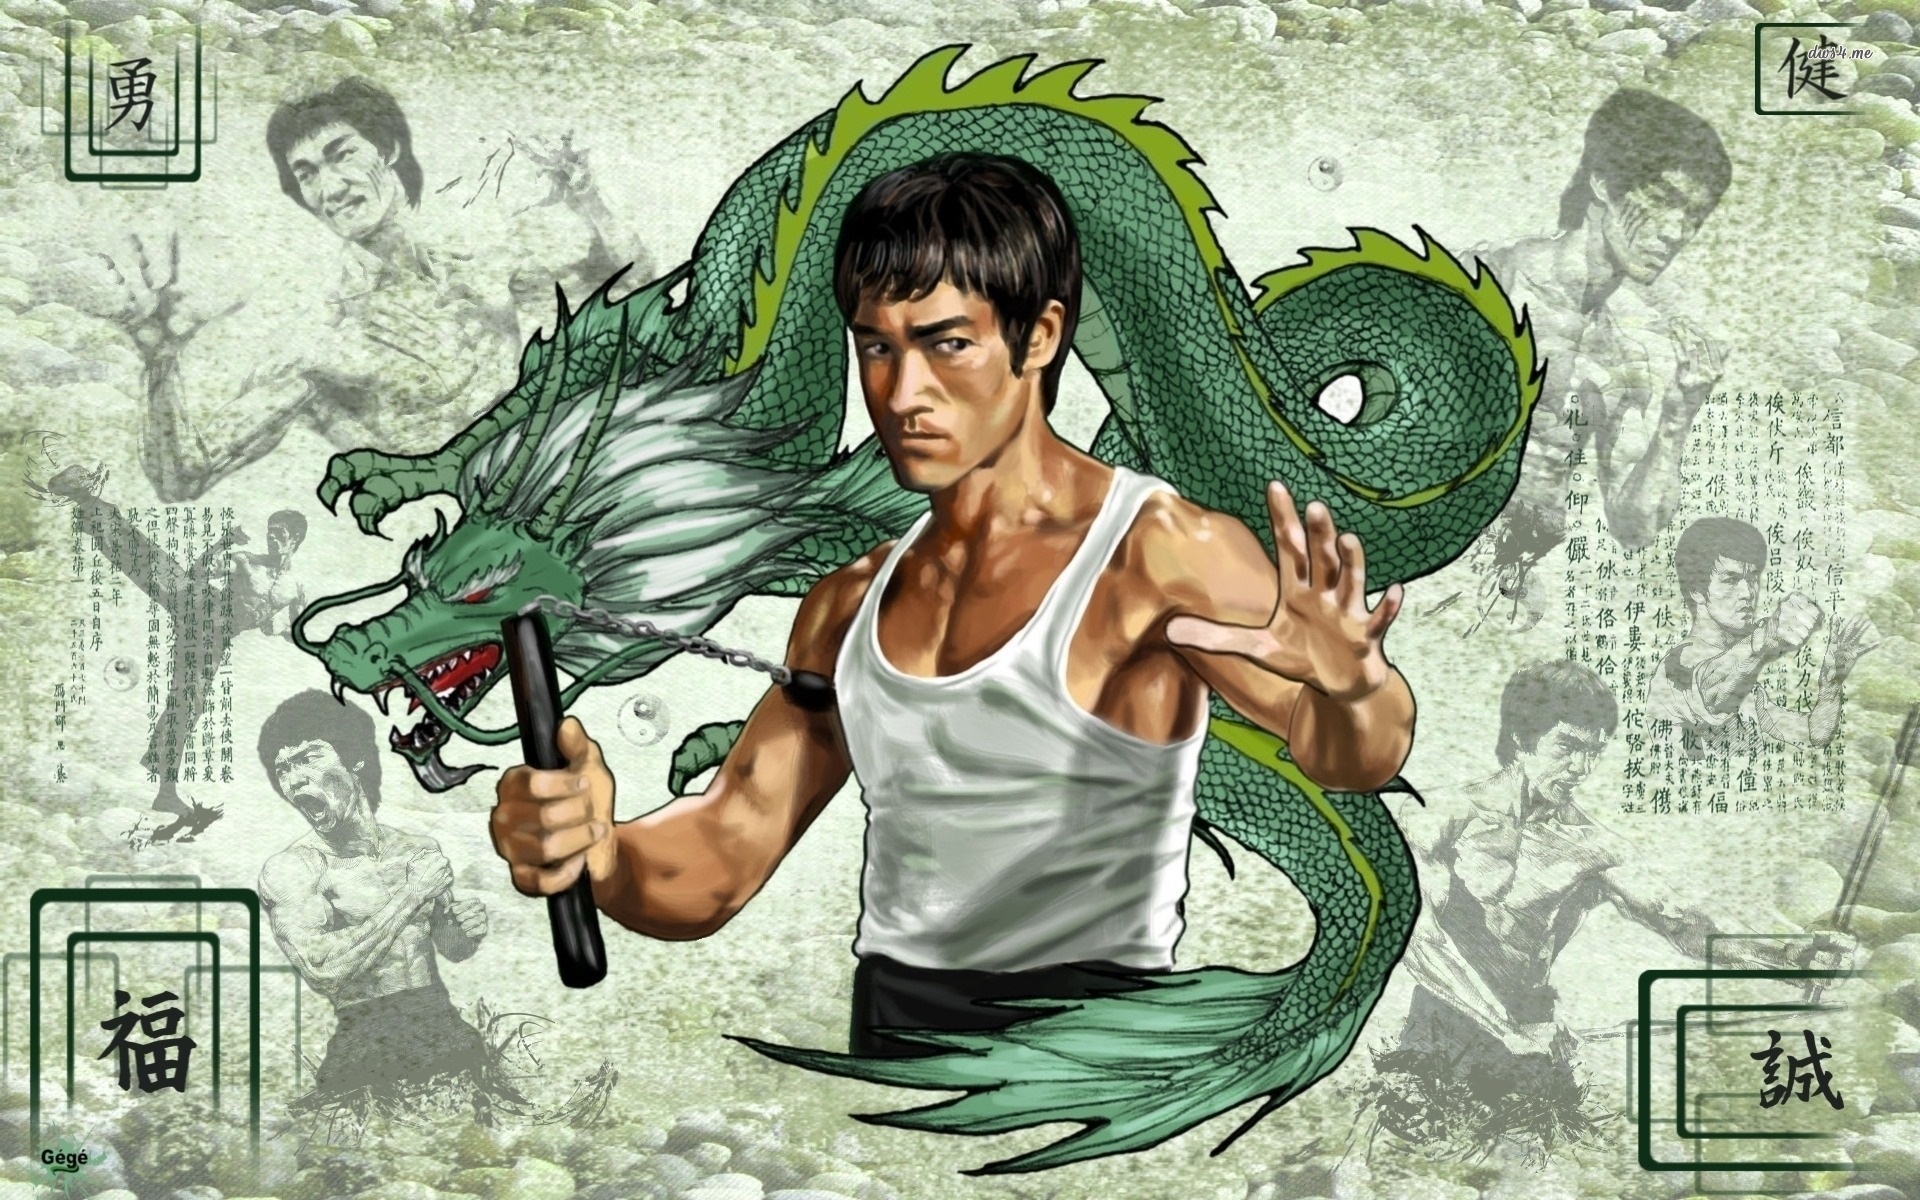 Bruce Lee Wallpaper 12